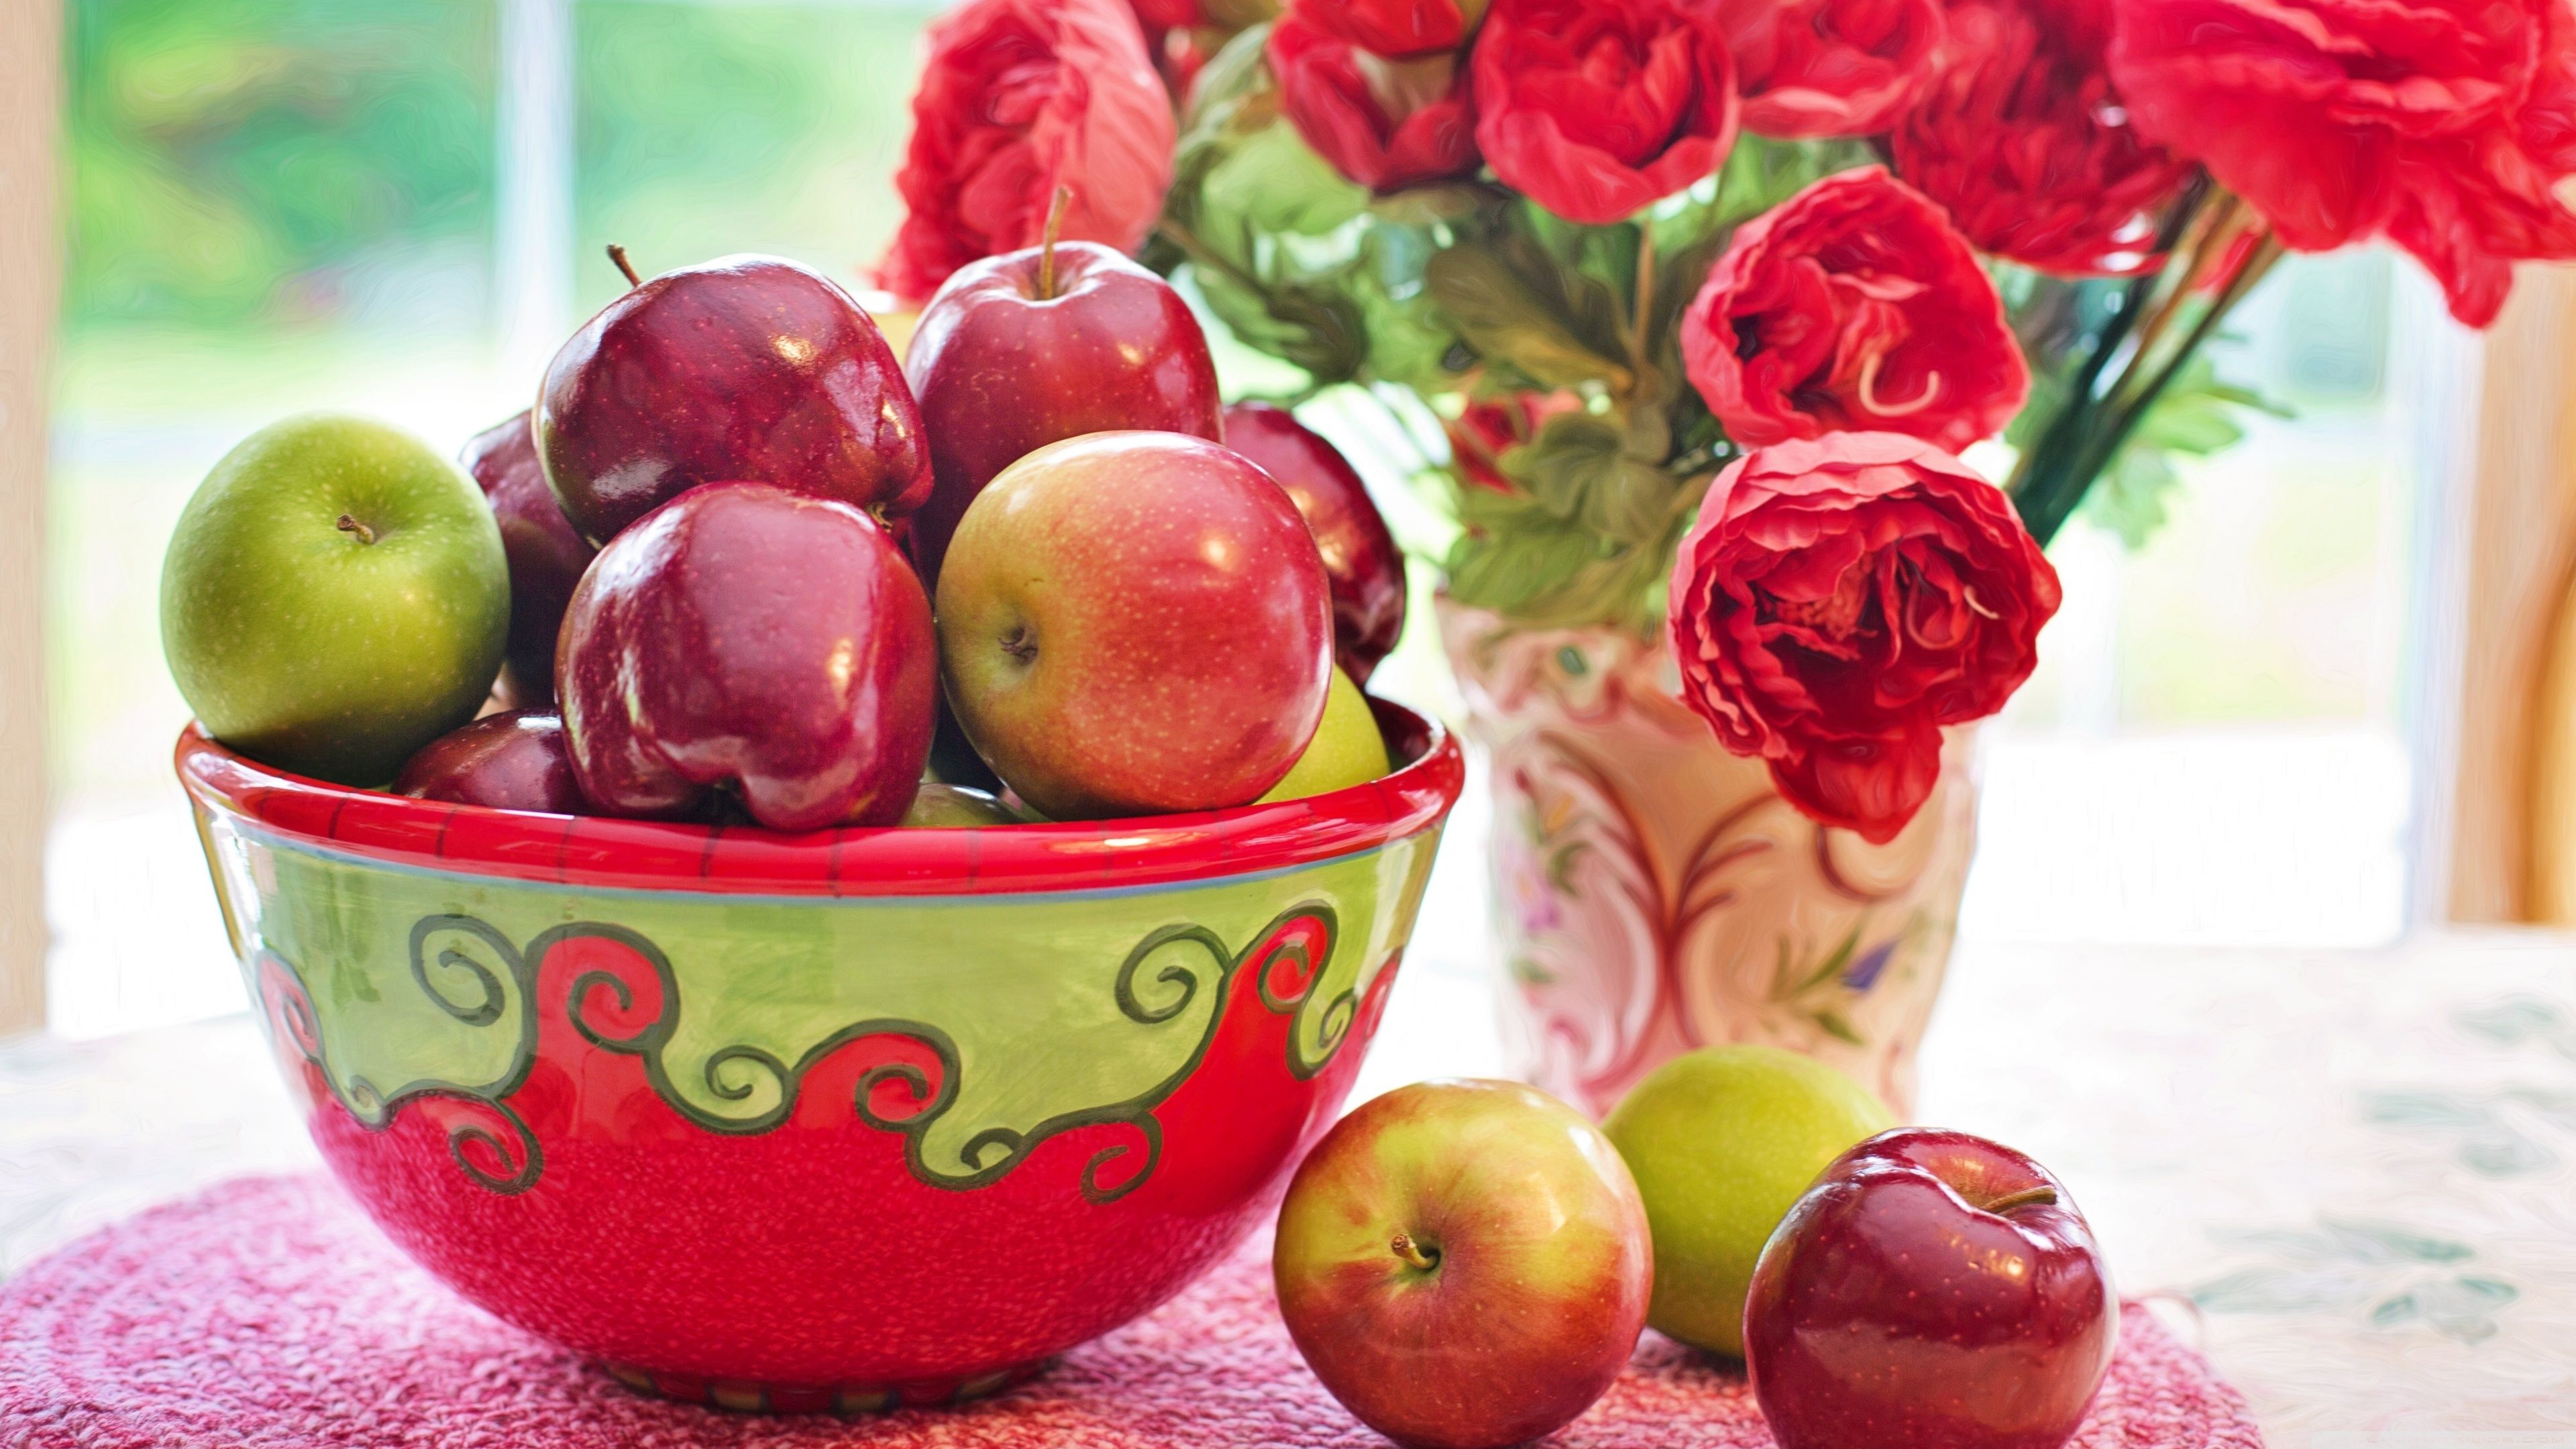 Still Life Apples fruits Bowl, Red Flowers in Vase Ultra HD Desktop Background Wallpaper for 4K UHD TV, Widescreen & UltraWide Desktop & Laptop, Tablet